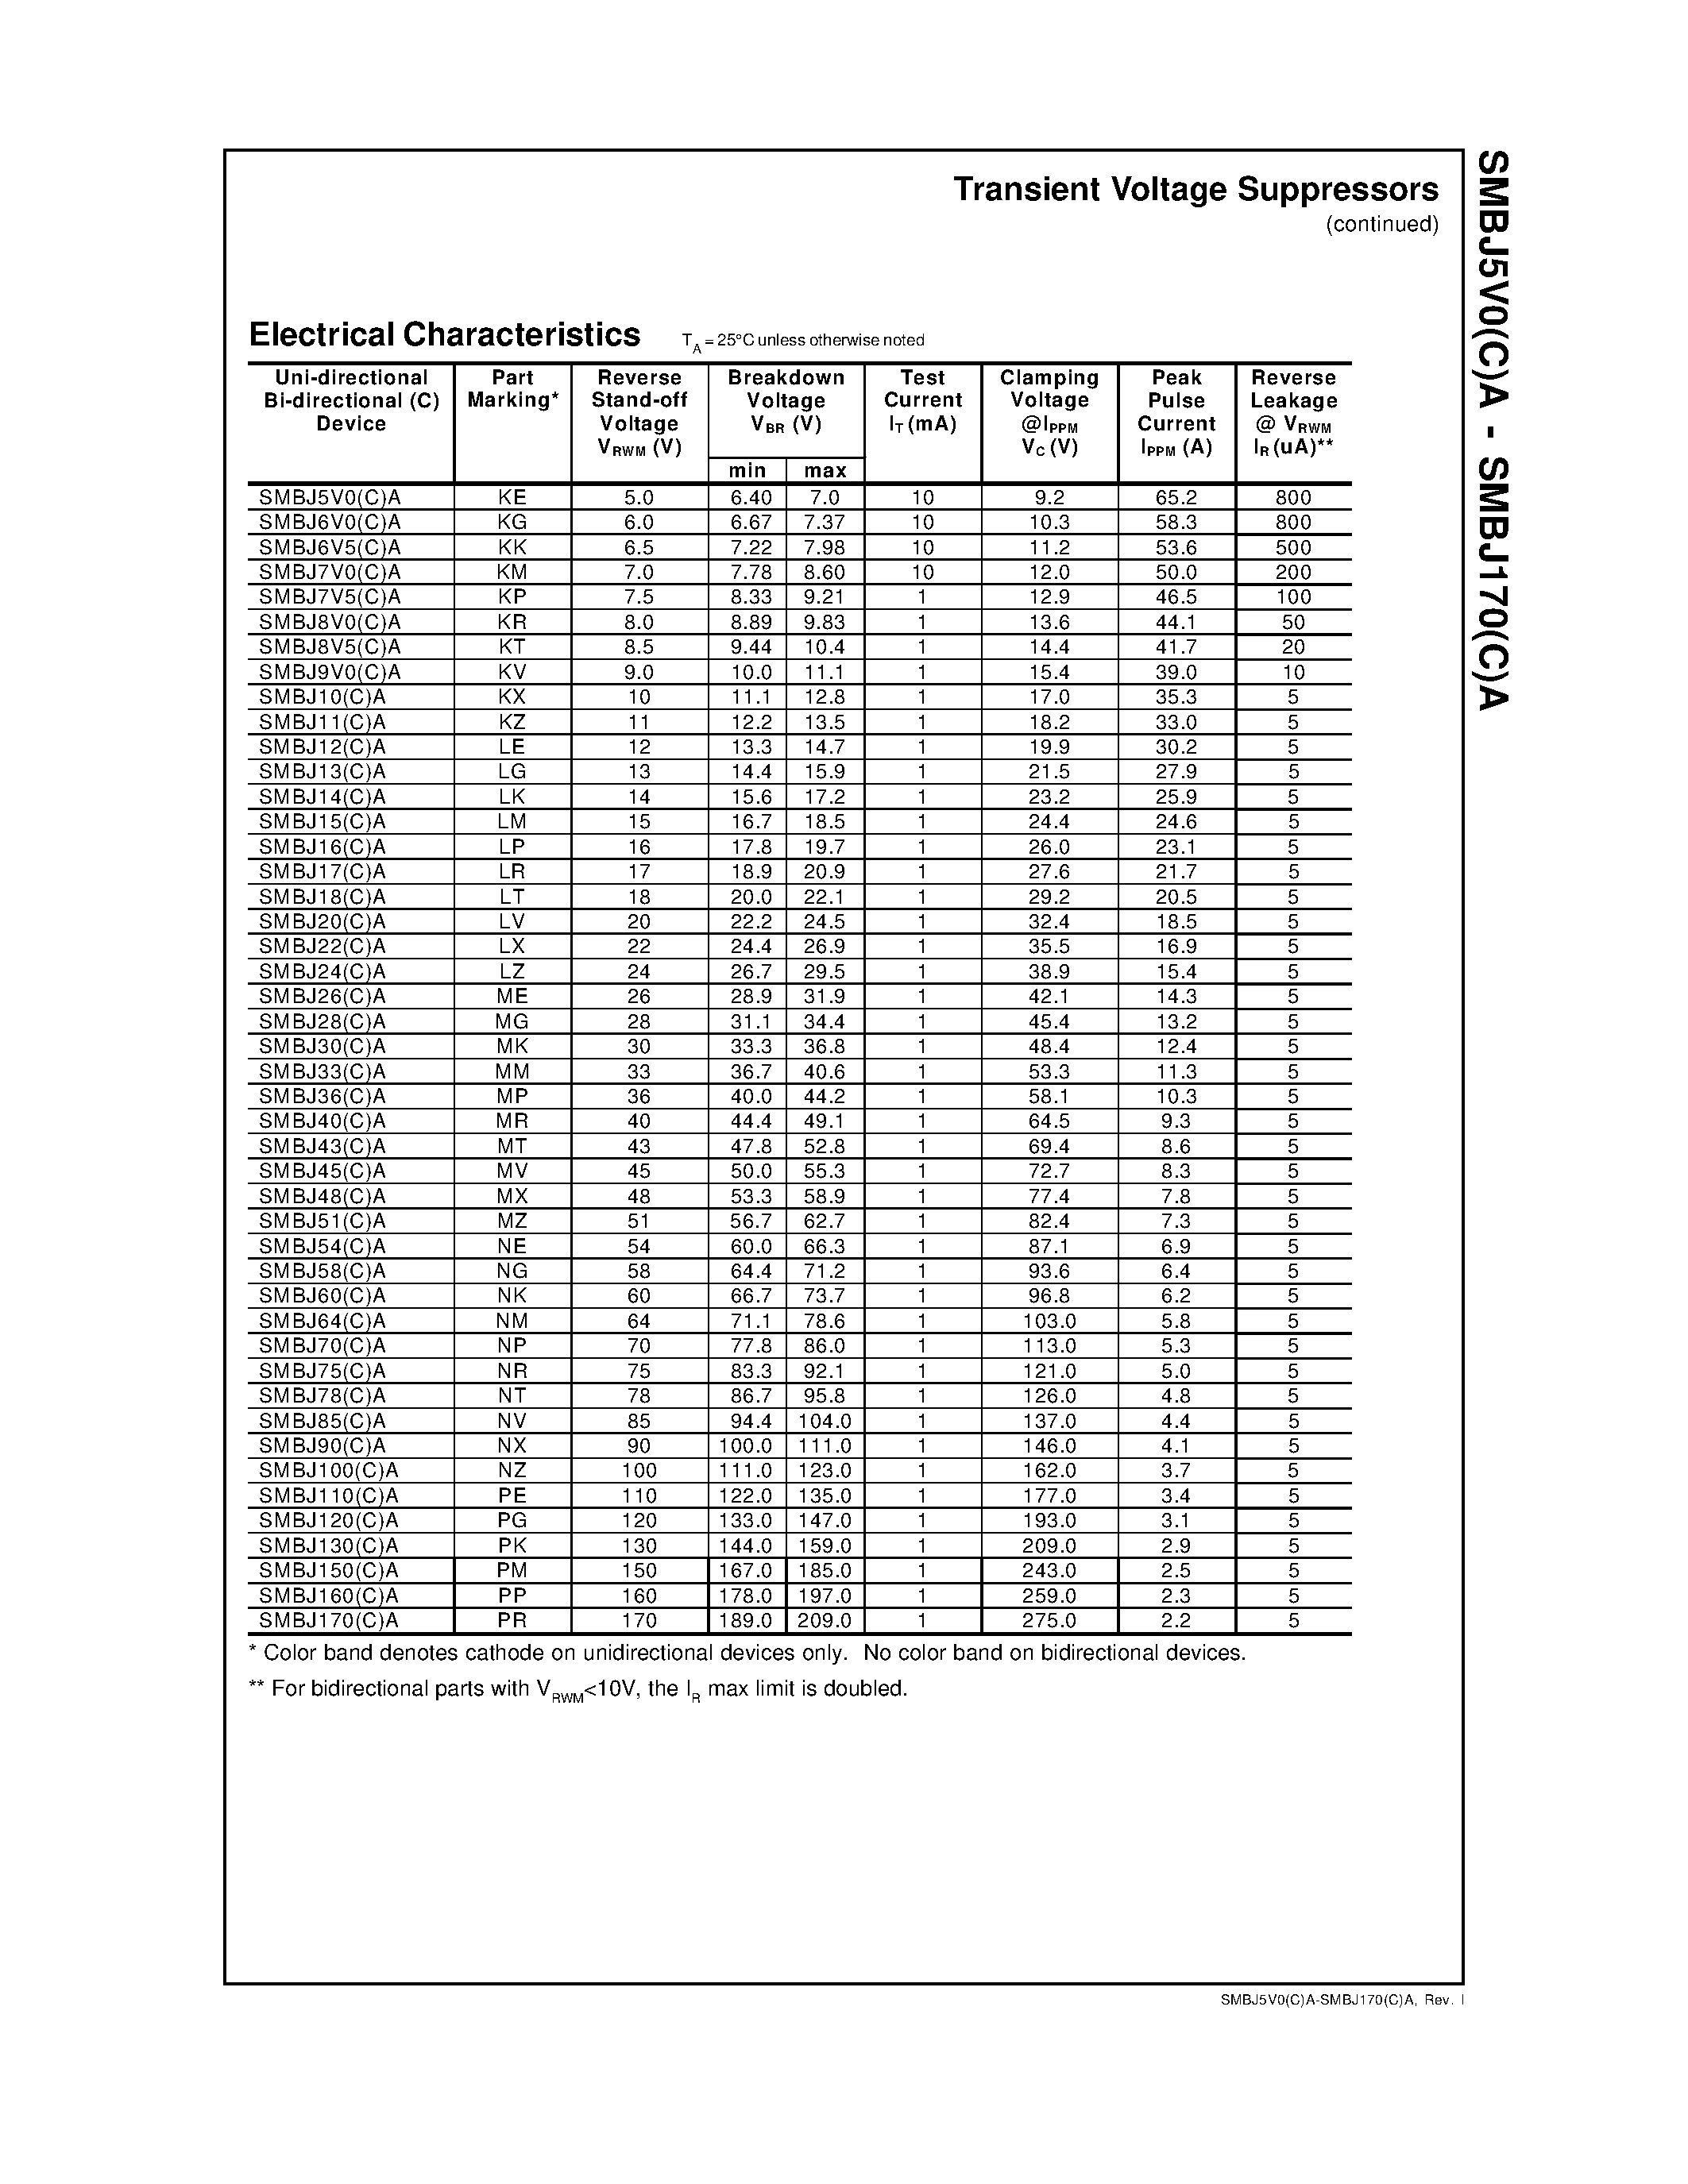 Datasheet SMBJ24A - Transient Voltage Suppressors SMBJ5V0(C)A - SMBJ170(C)A page 2